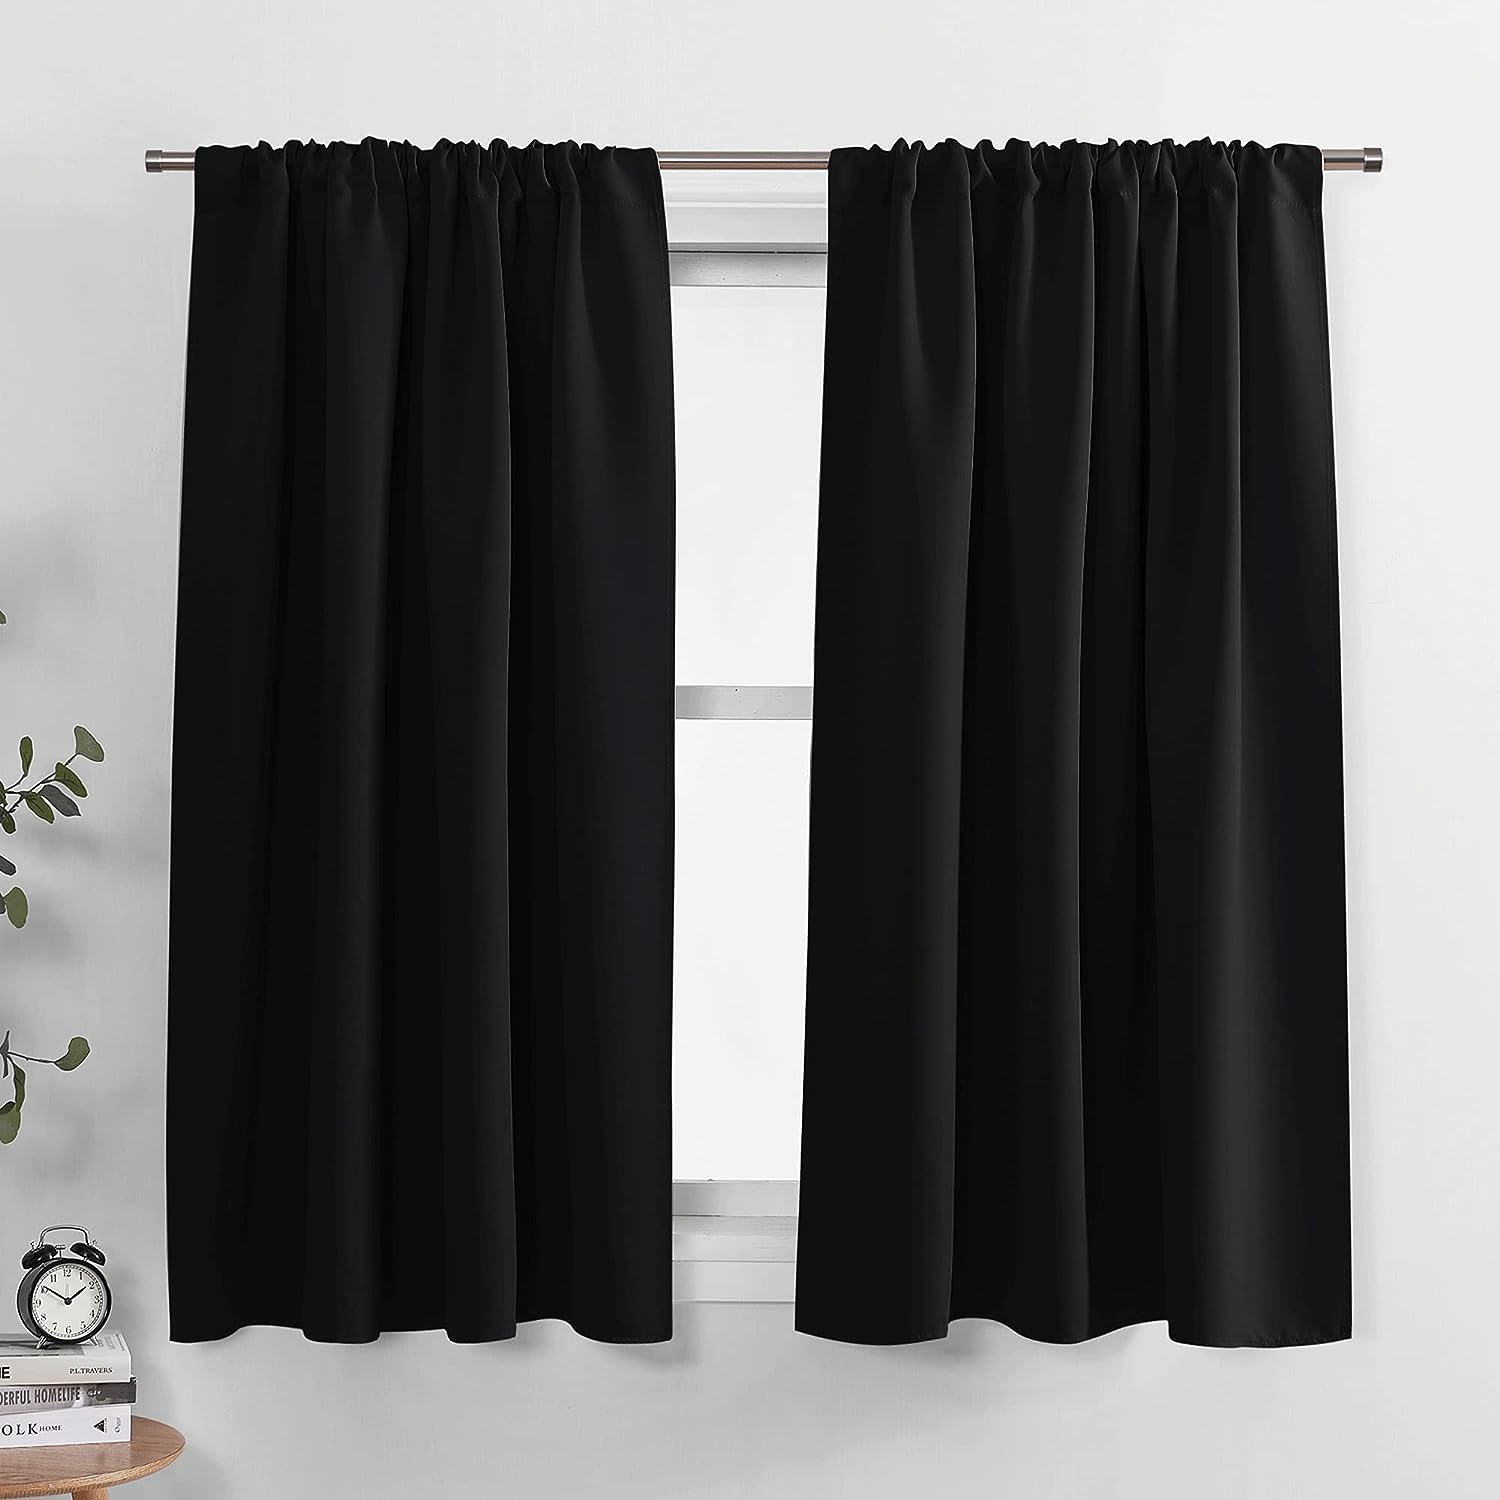 PONY DANCE Bedroom Blackout Curtains - Black Short [...]